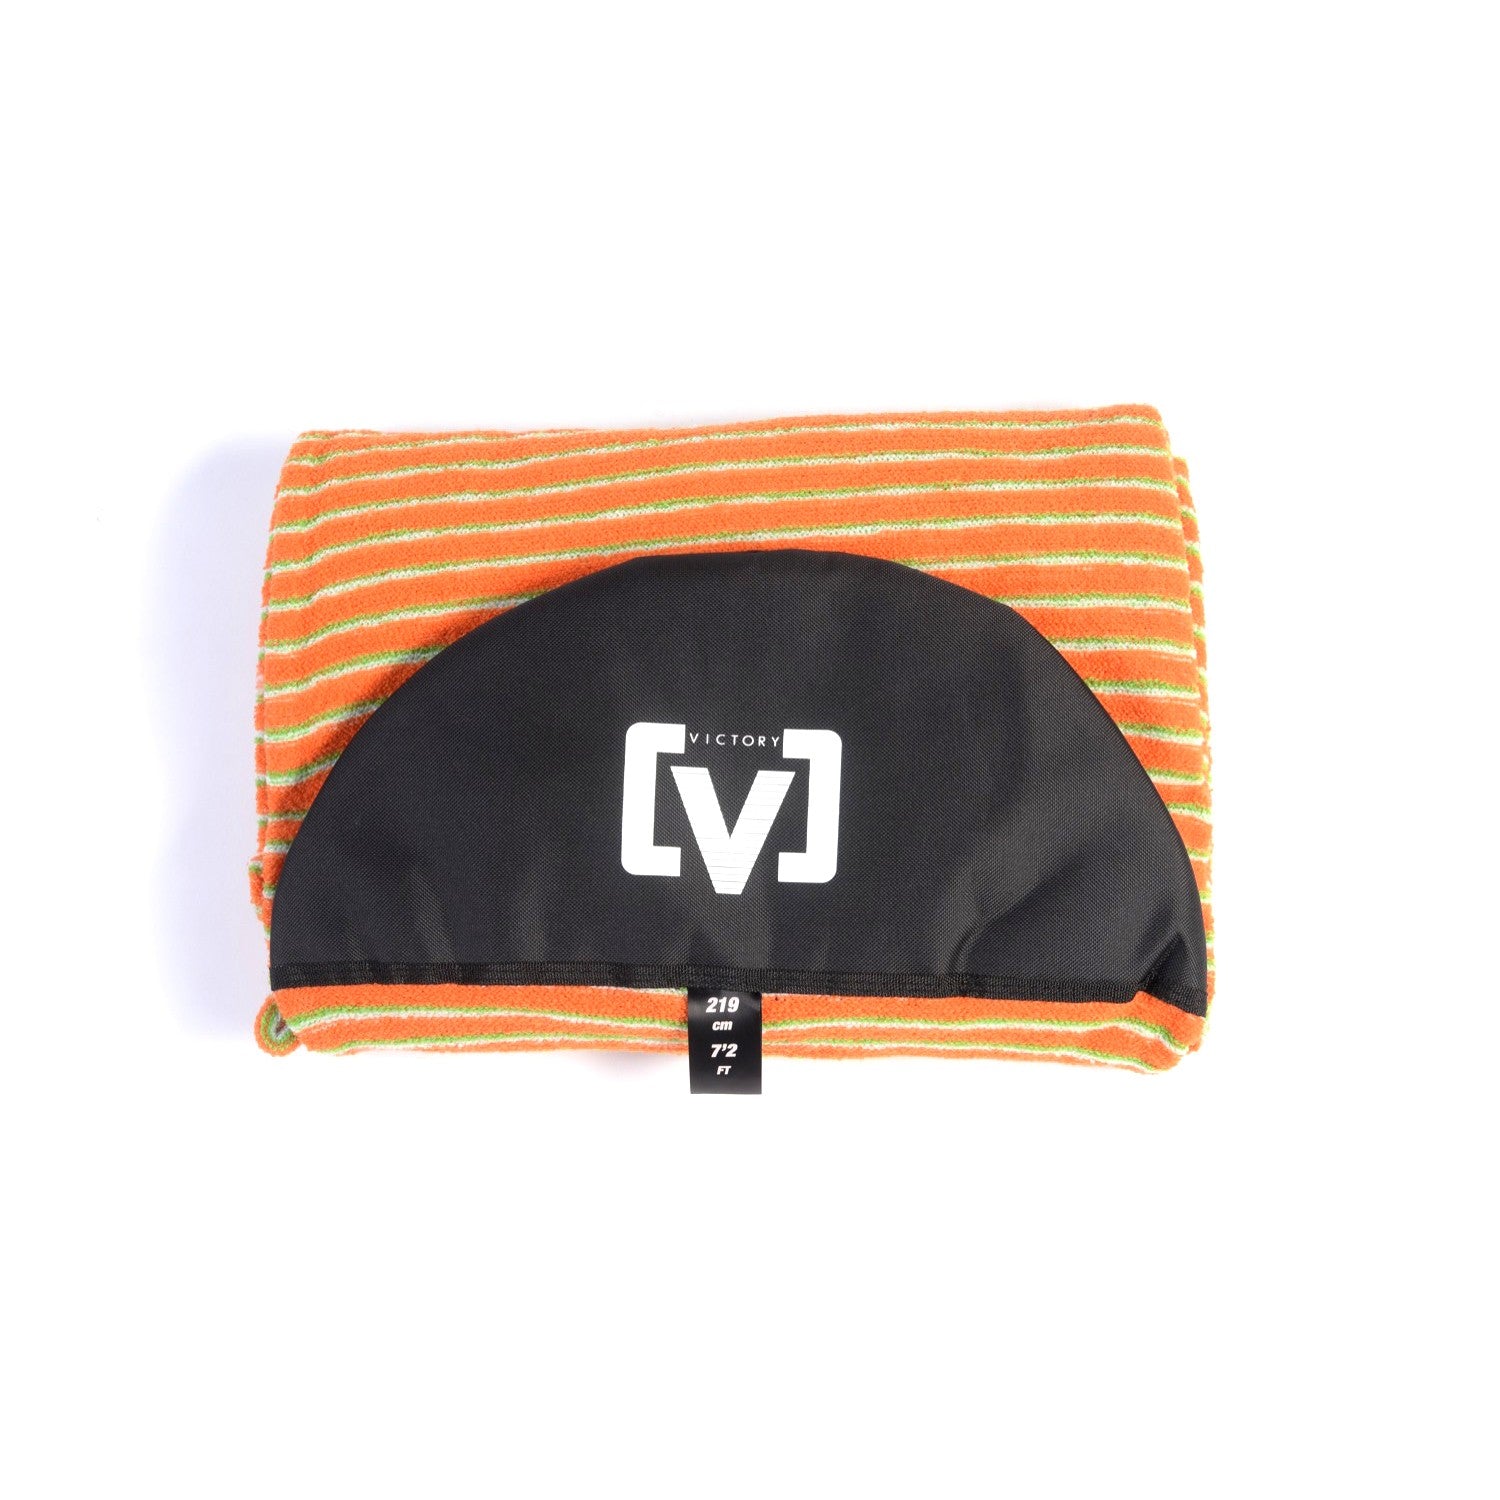 VICTORY - Longboard sock cover - 7'2 - Orange/Green